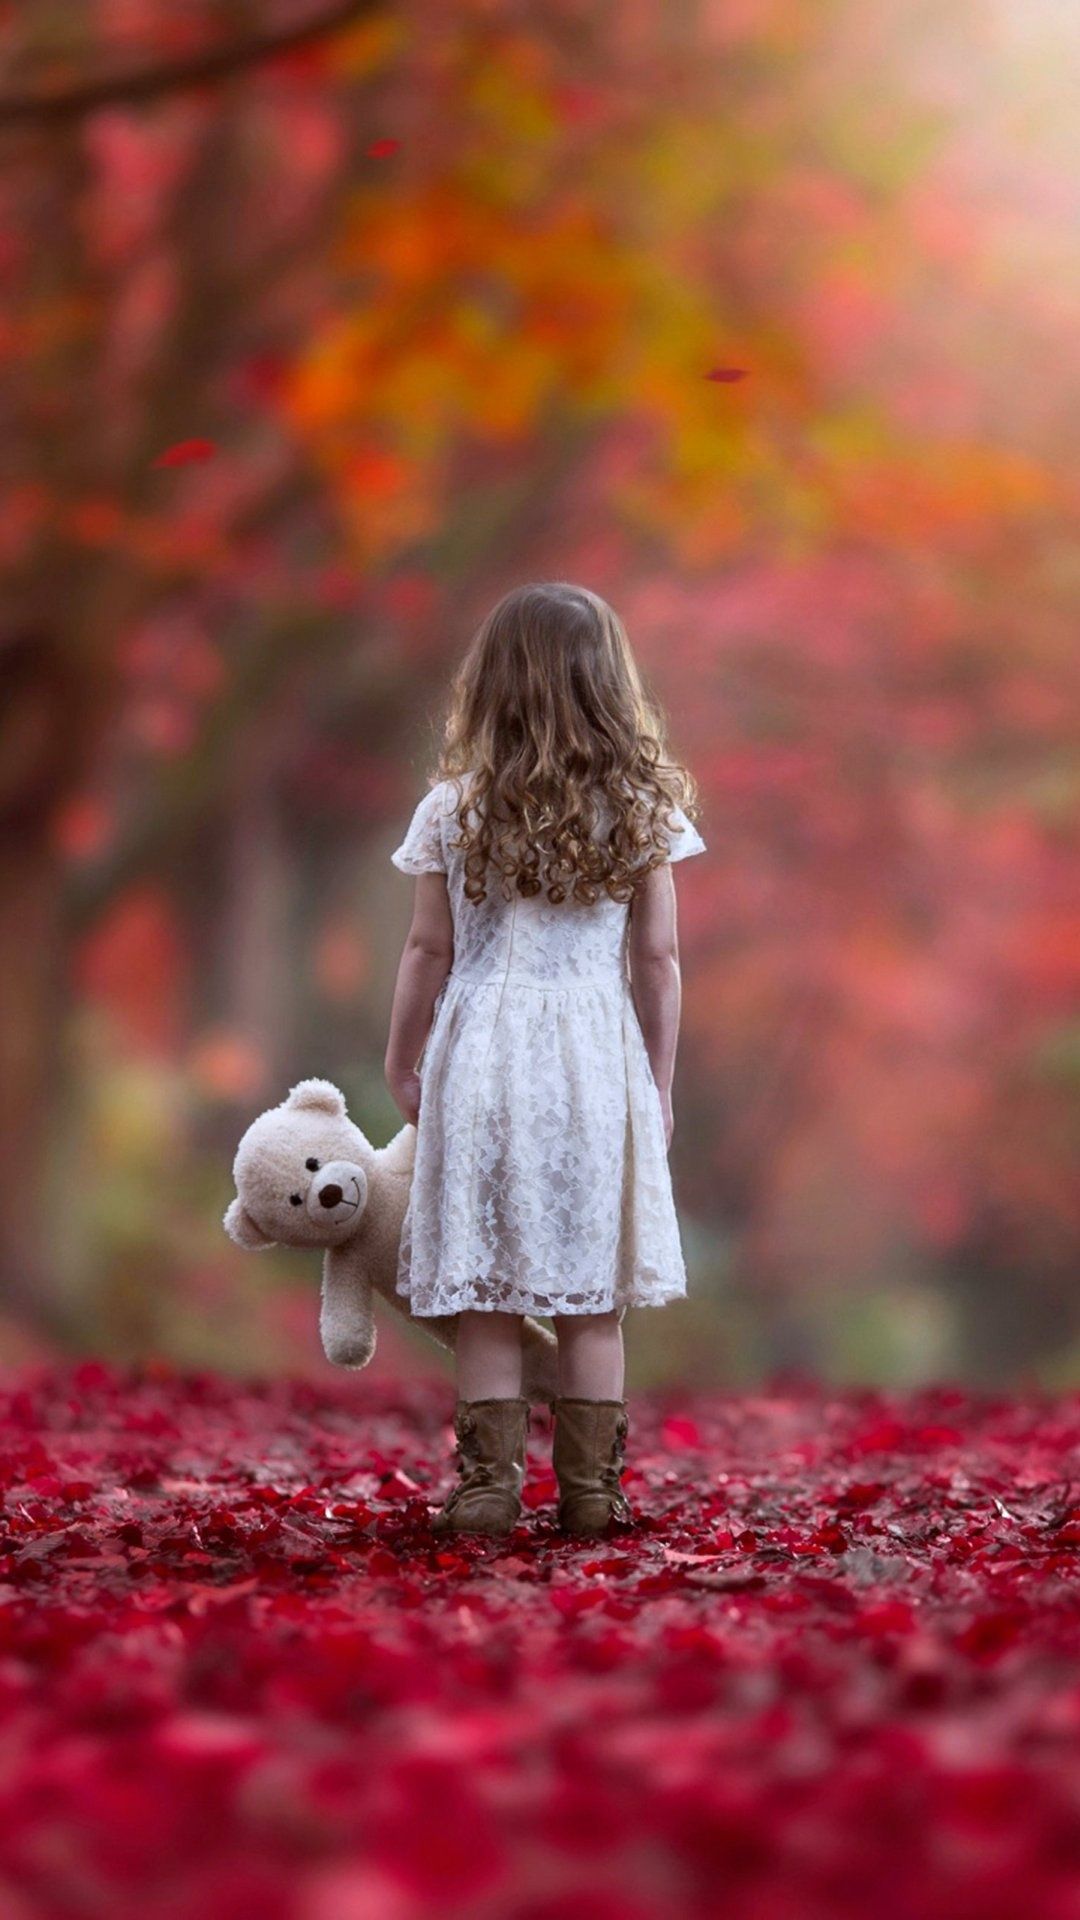 Autumn Sad Lonely Little Girl Wallpaper